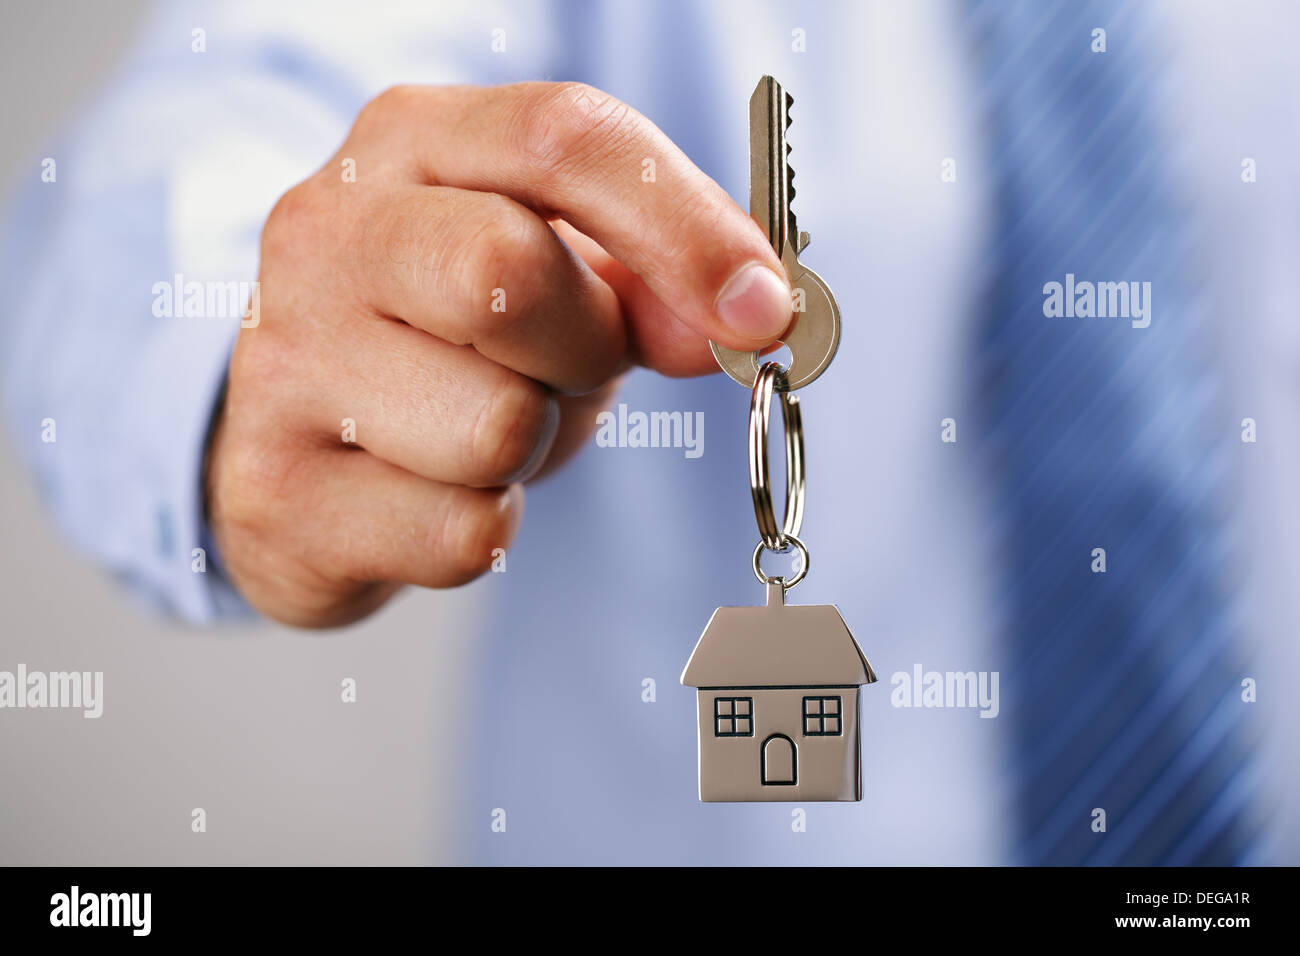 Giving house keys Stock Photo